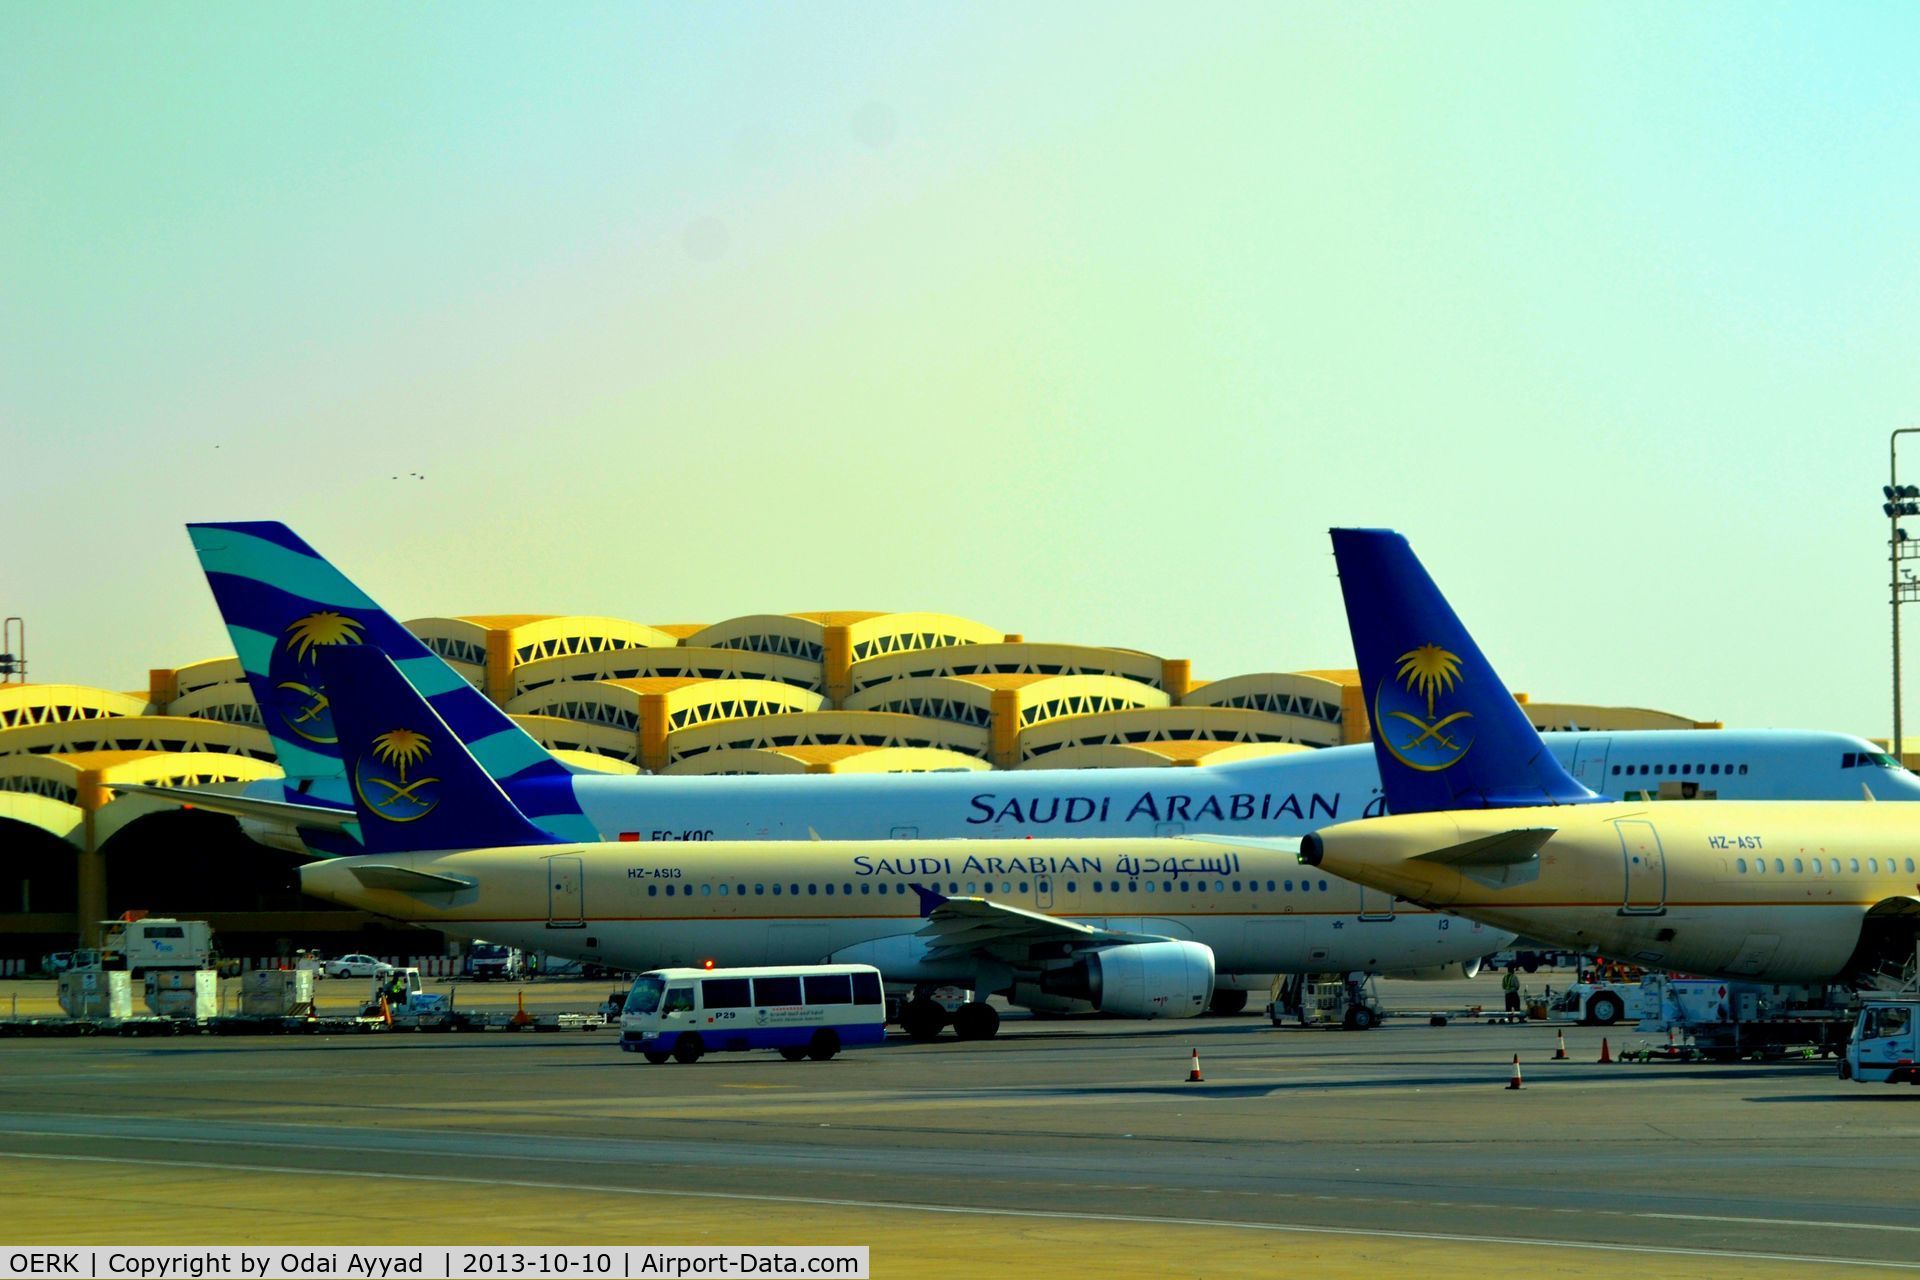 King Khalid International Airport, Riyadh Saudi Arabia (OERK) - Two airbus's and one B747 at Riyadh airport 